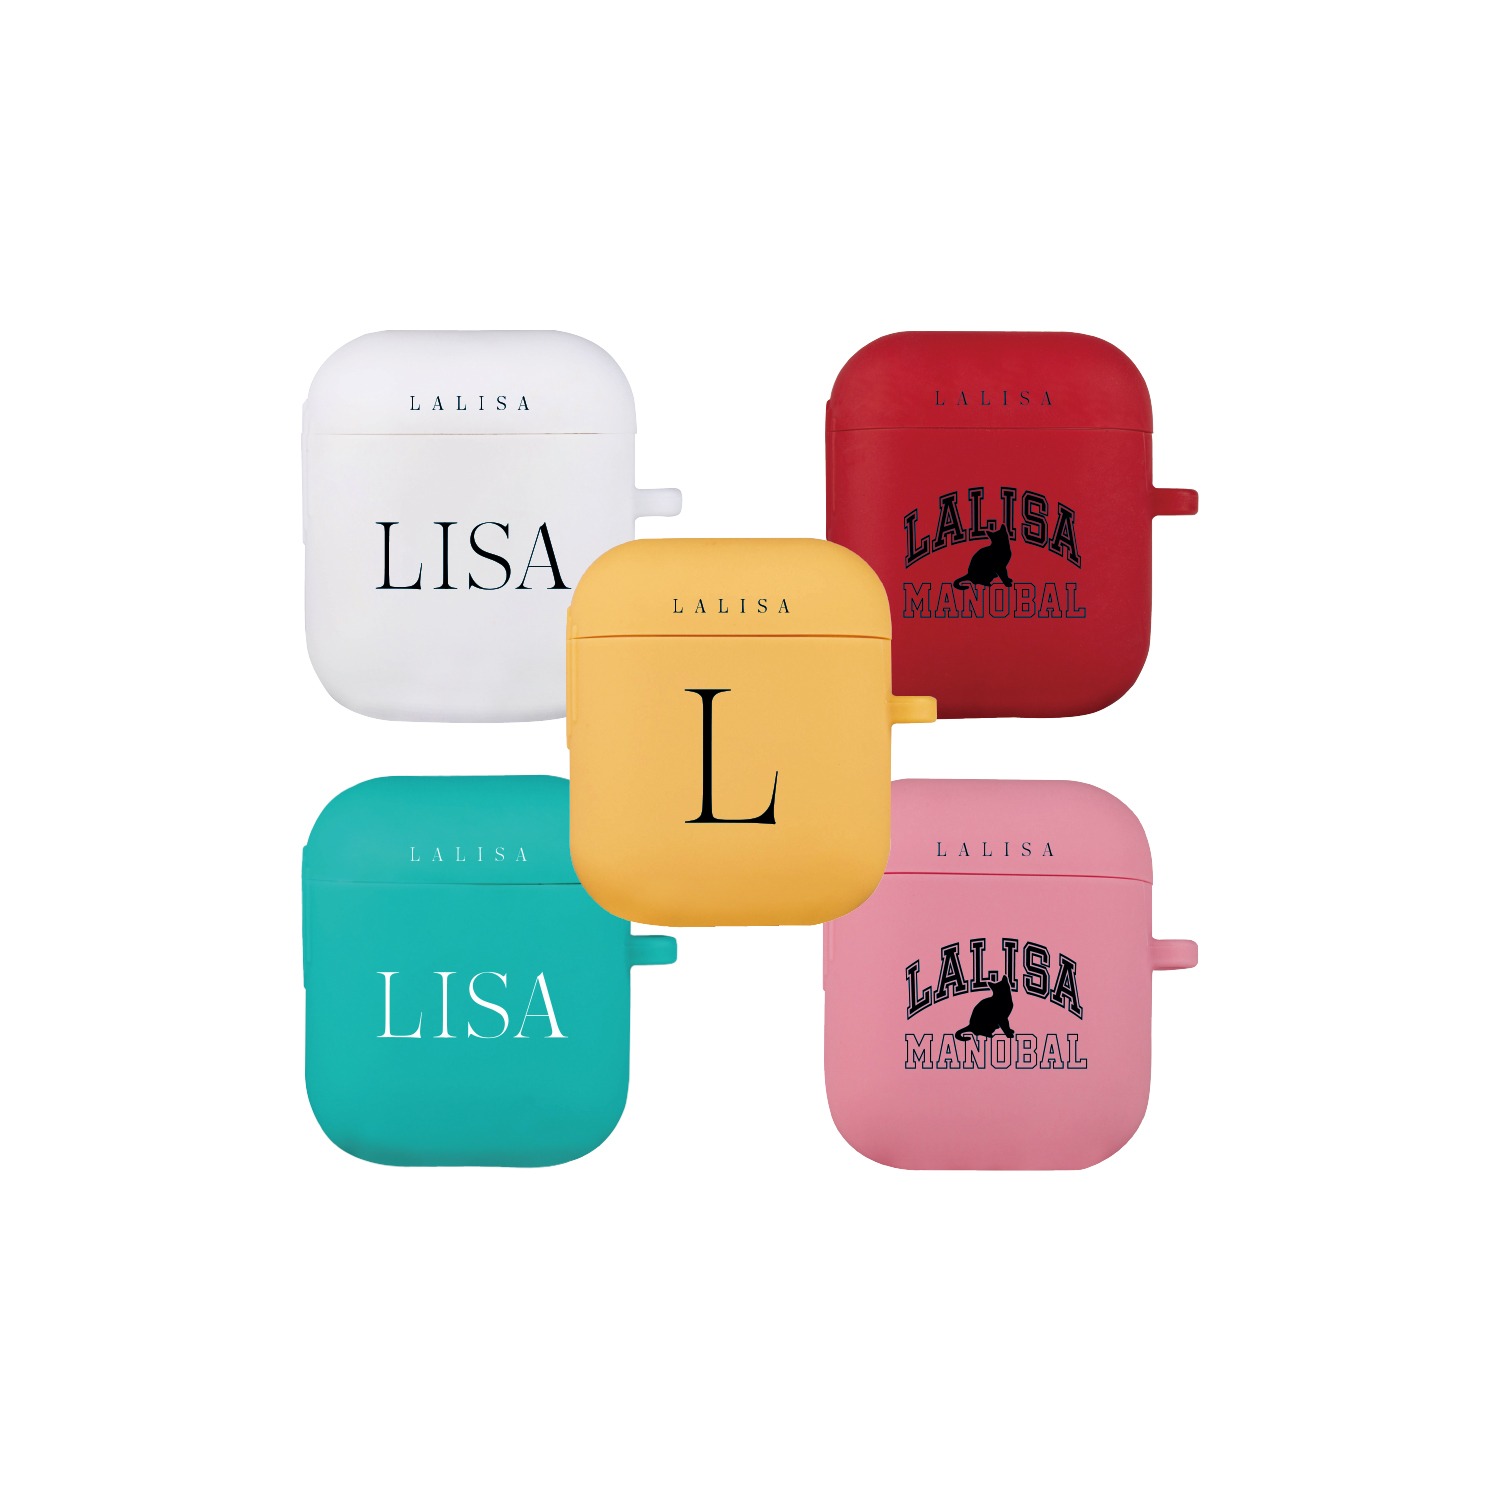 [TRADIT] LISA LALISA AIRPODS CASE